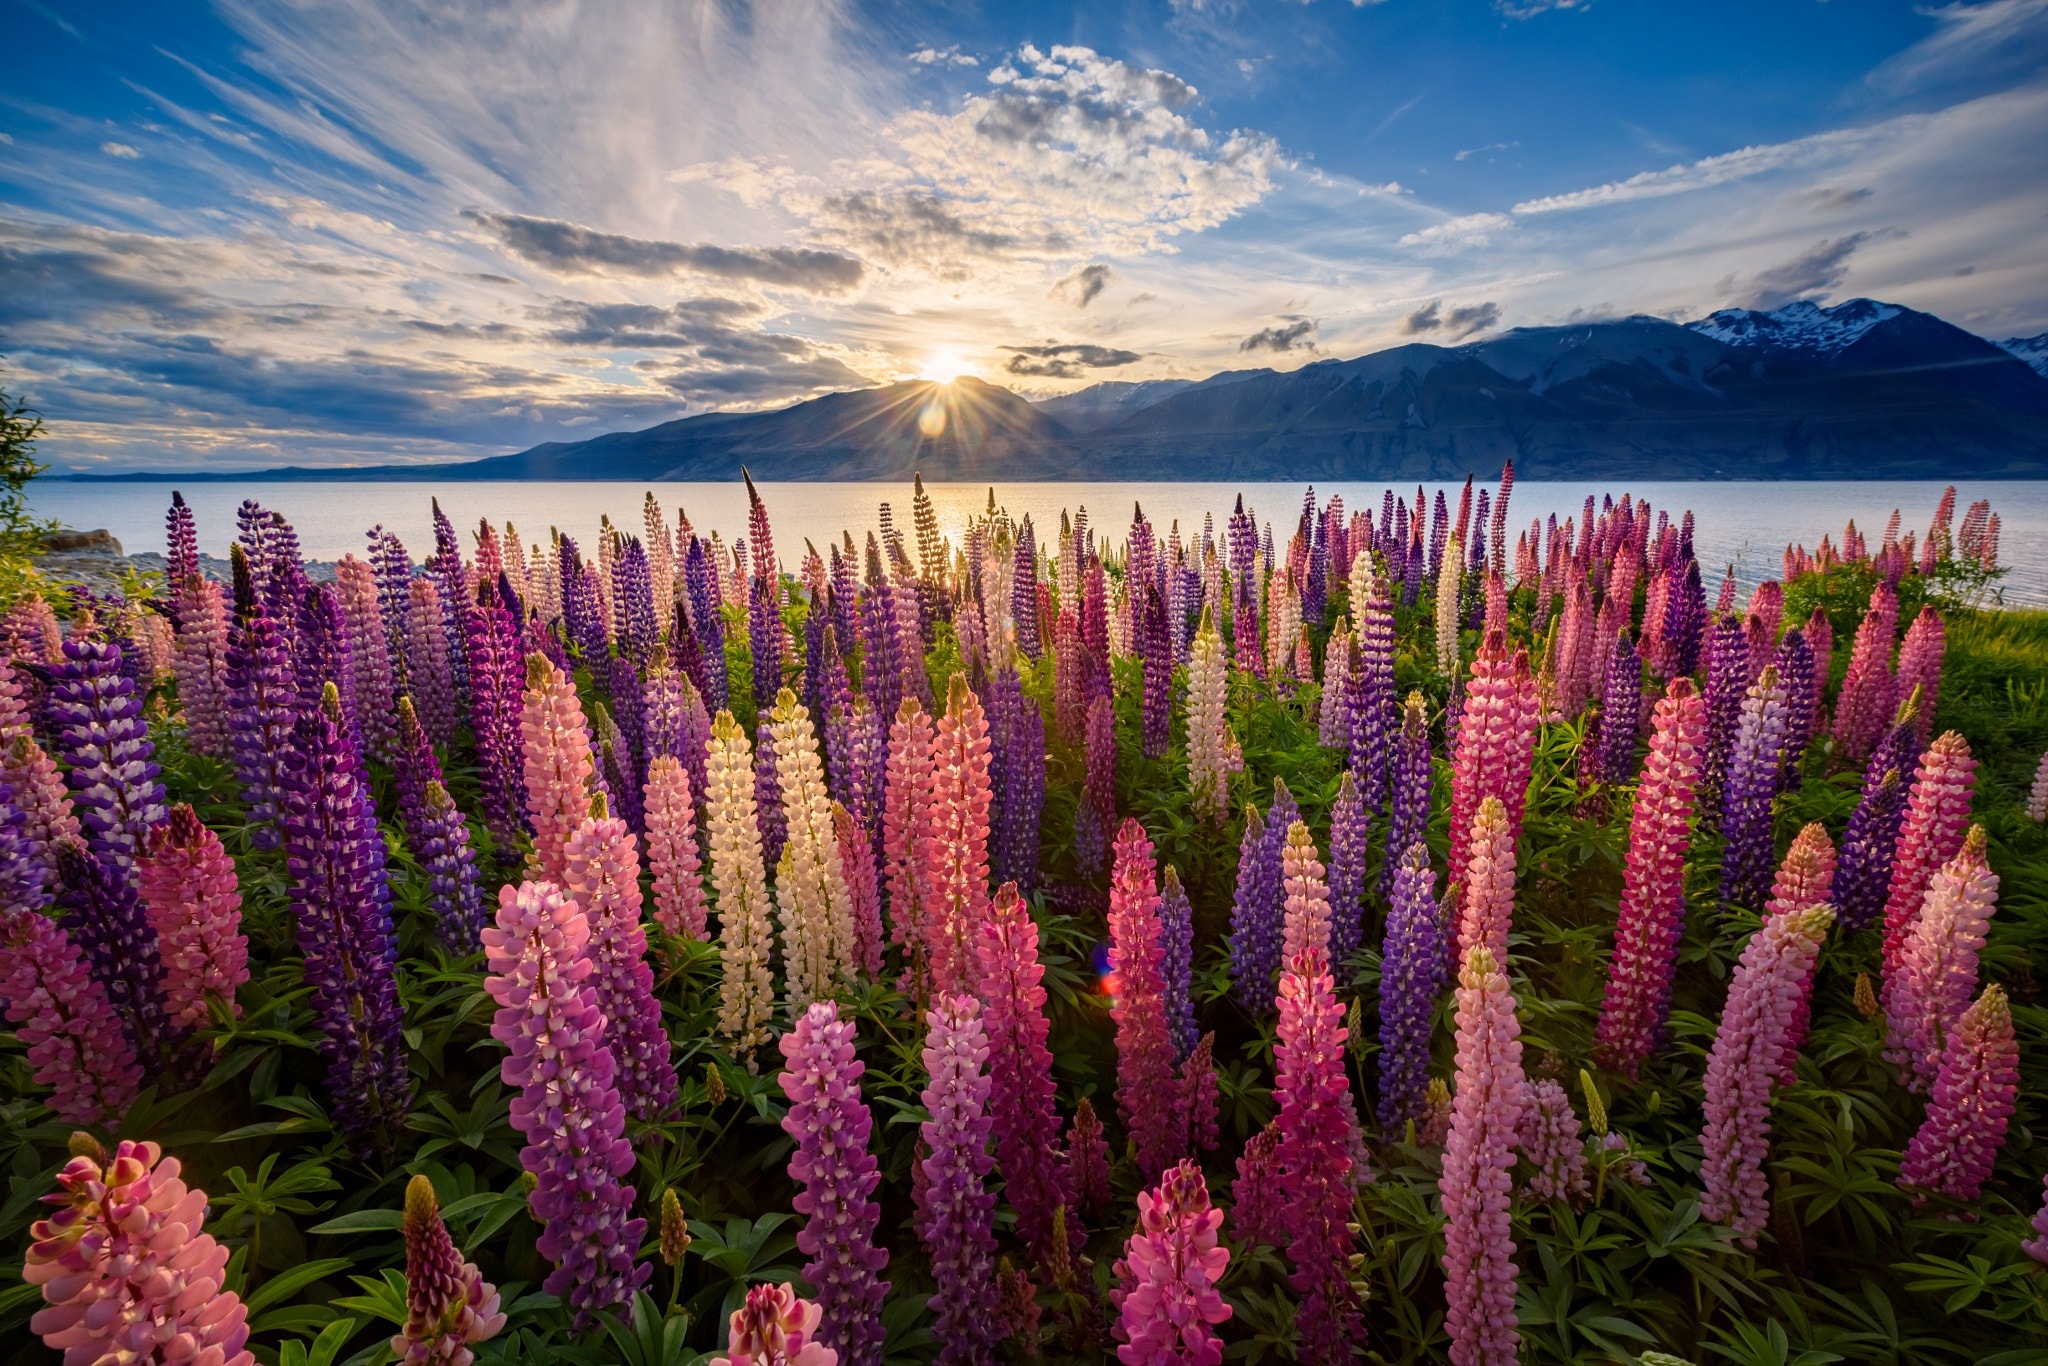 General 2048x1366 New Zealand nature landscape flowers plants sunlight colorful